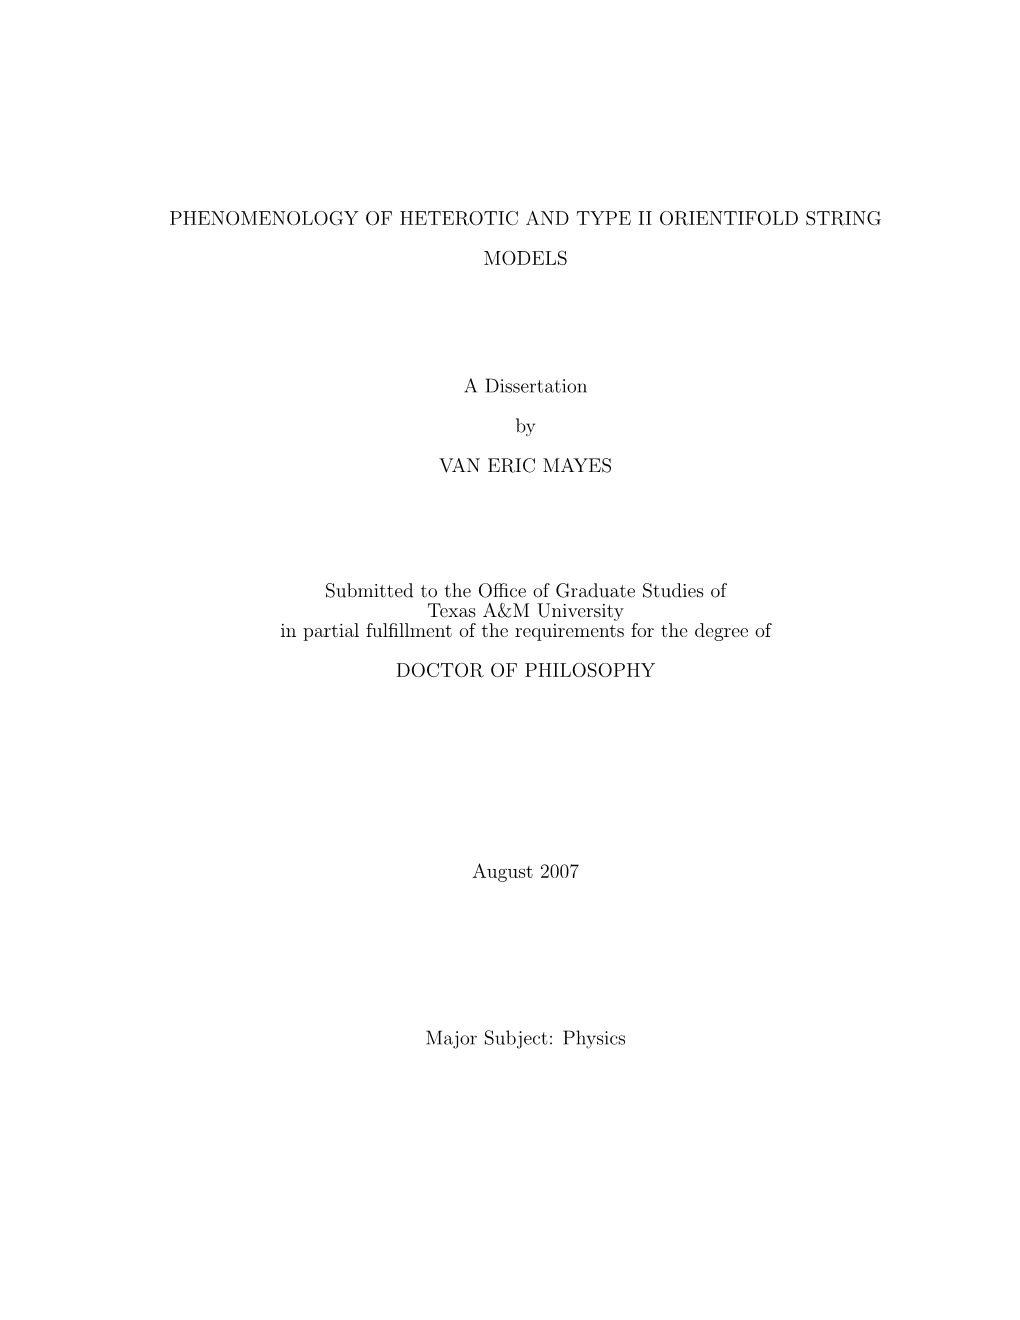 Phenomenology of Heterotic and Type Ii Orientifold String